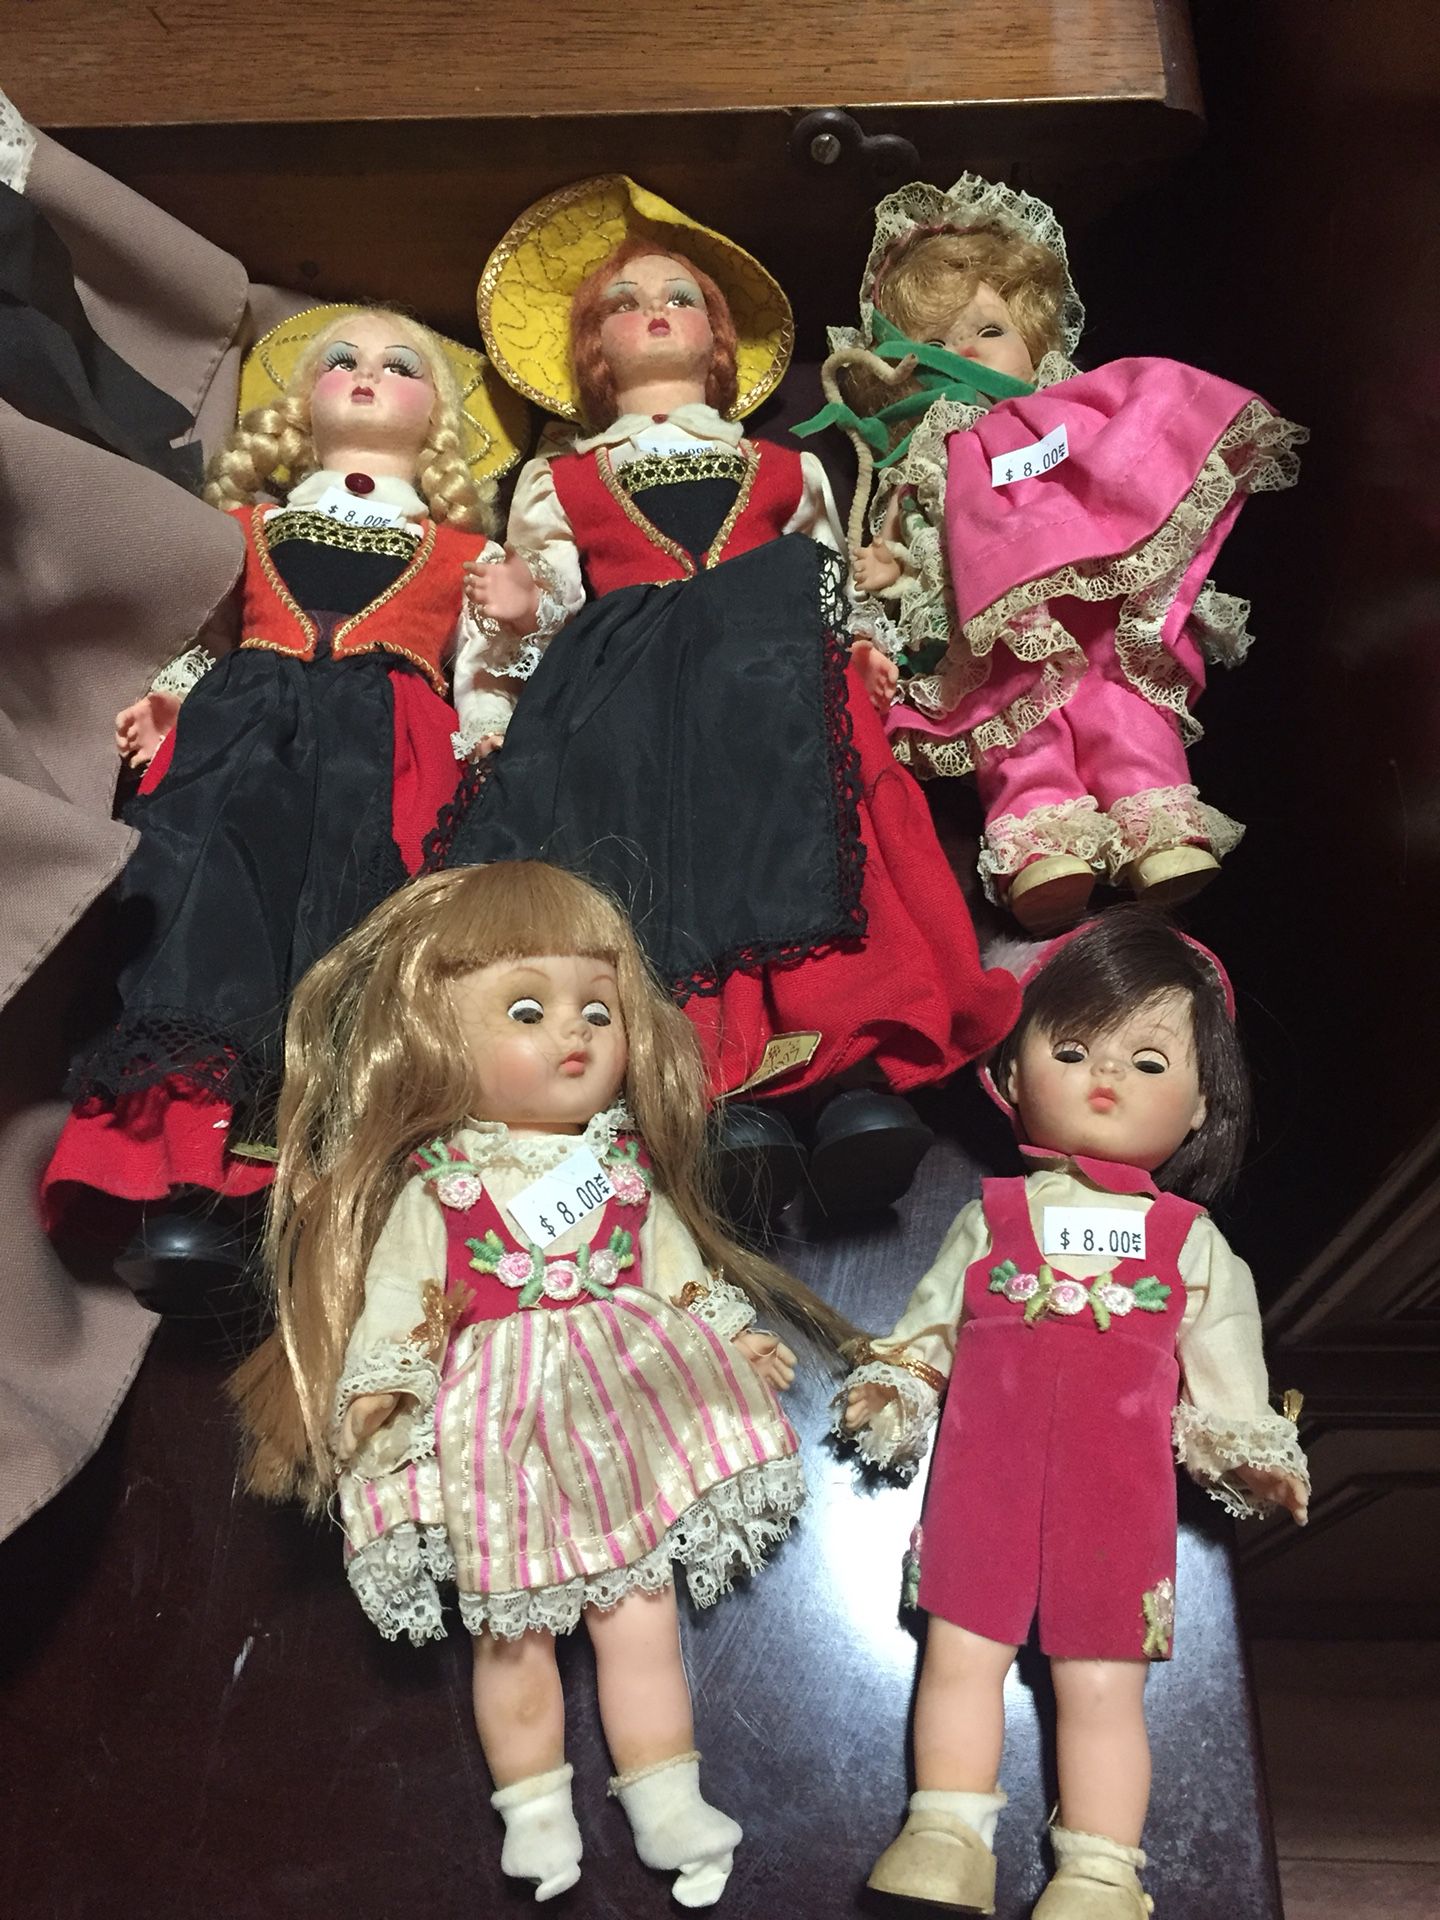 Vintage dolls $8 a piece